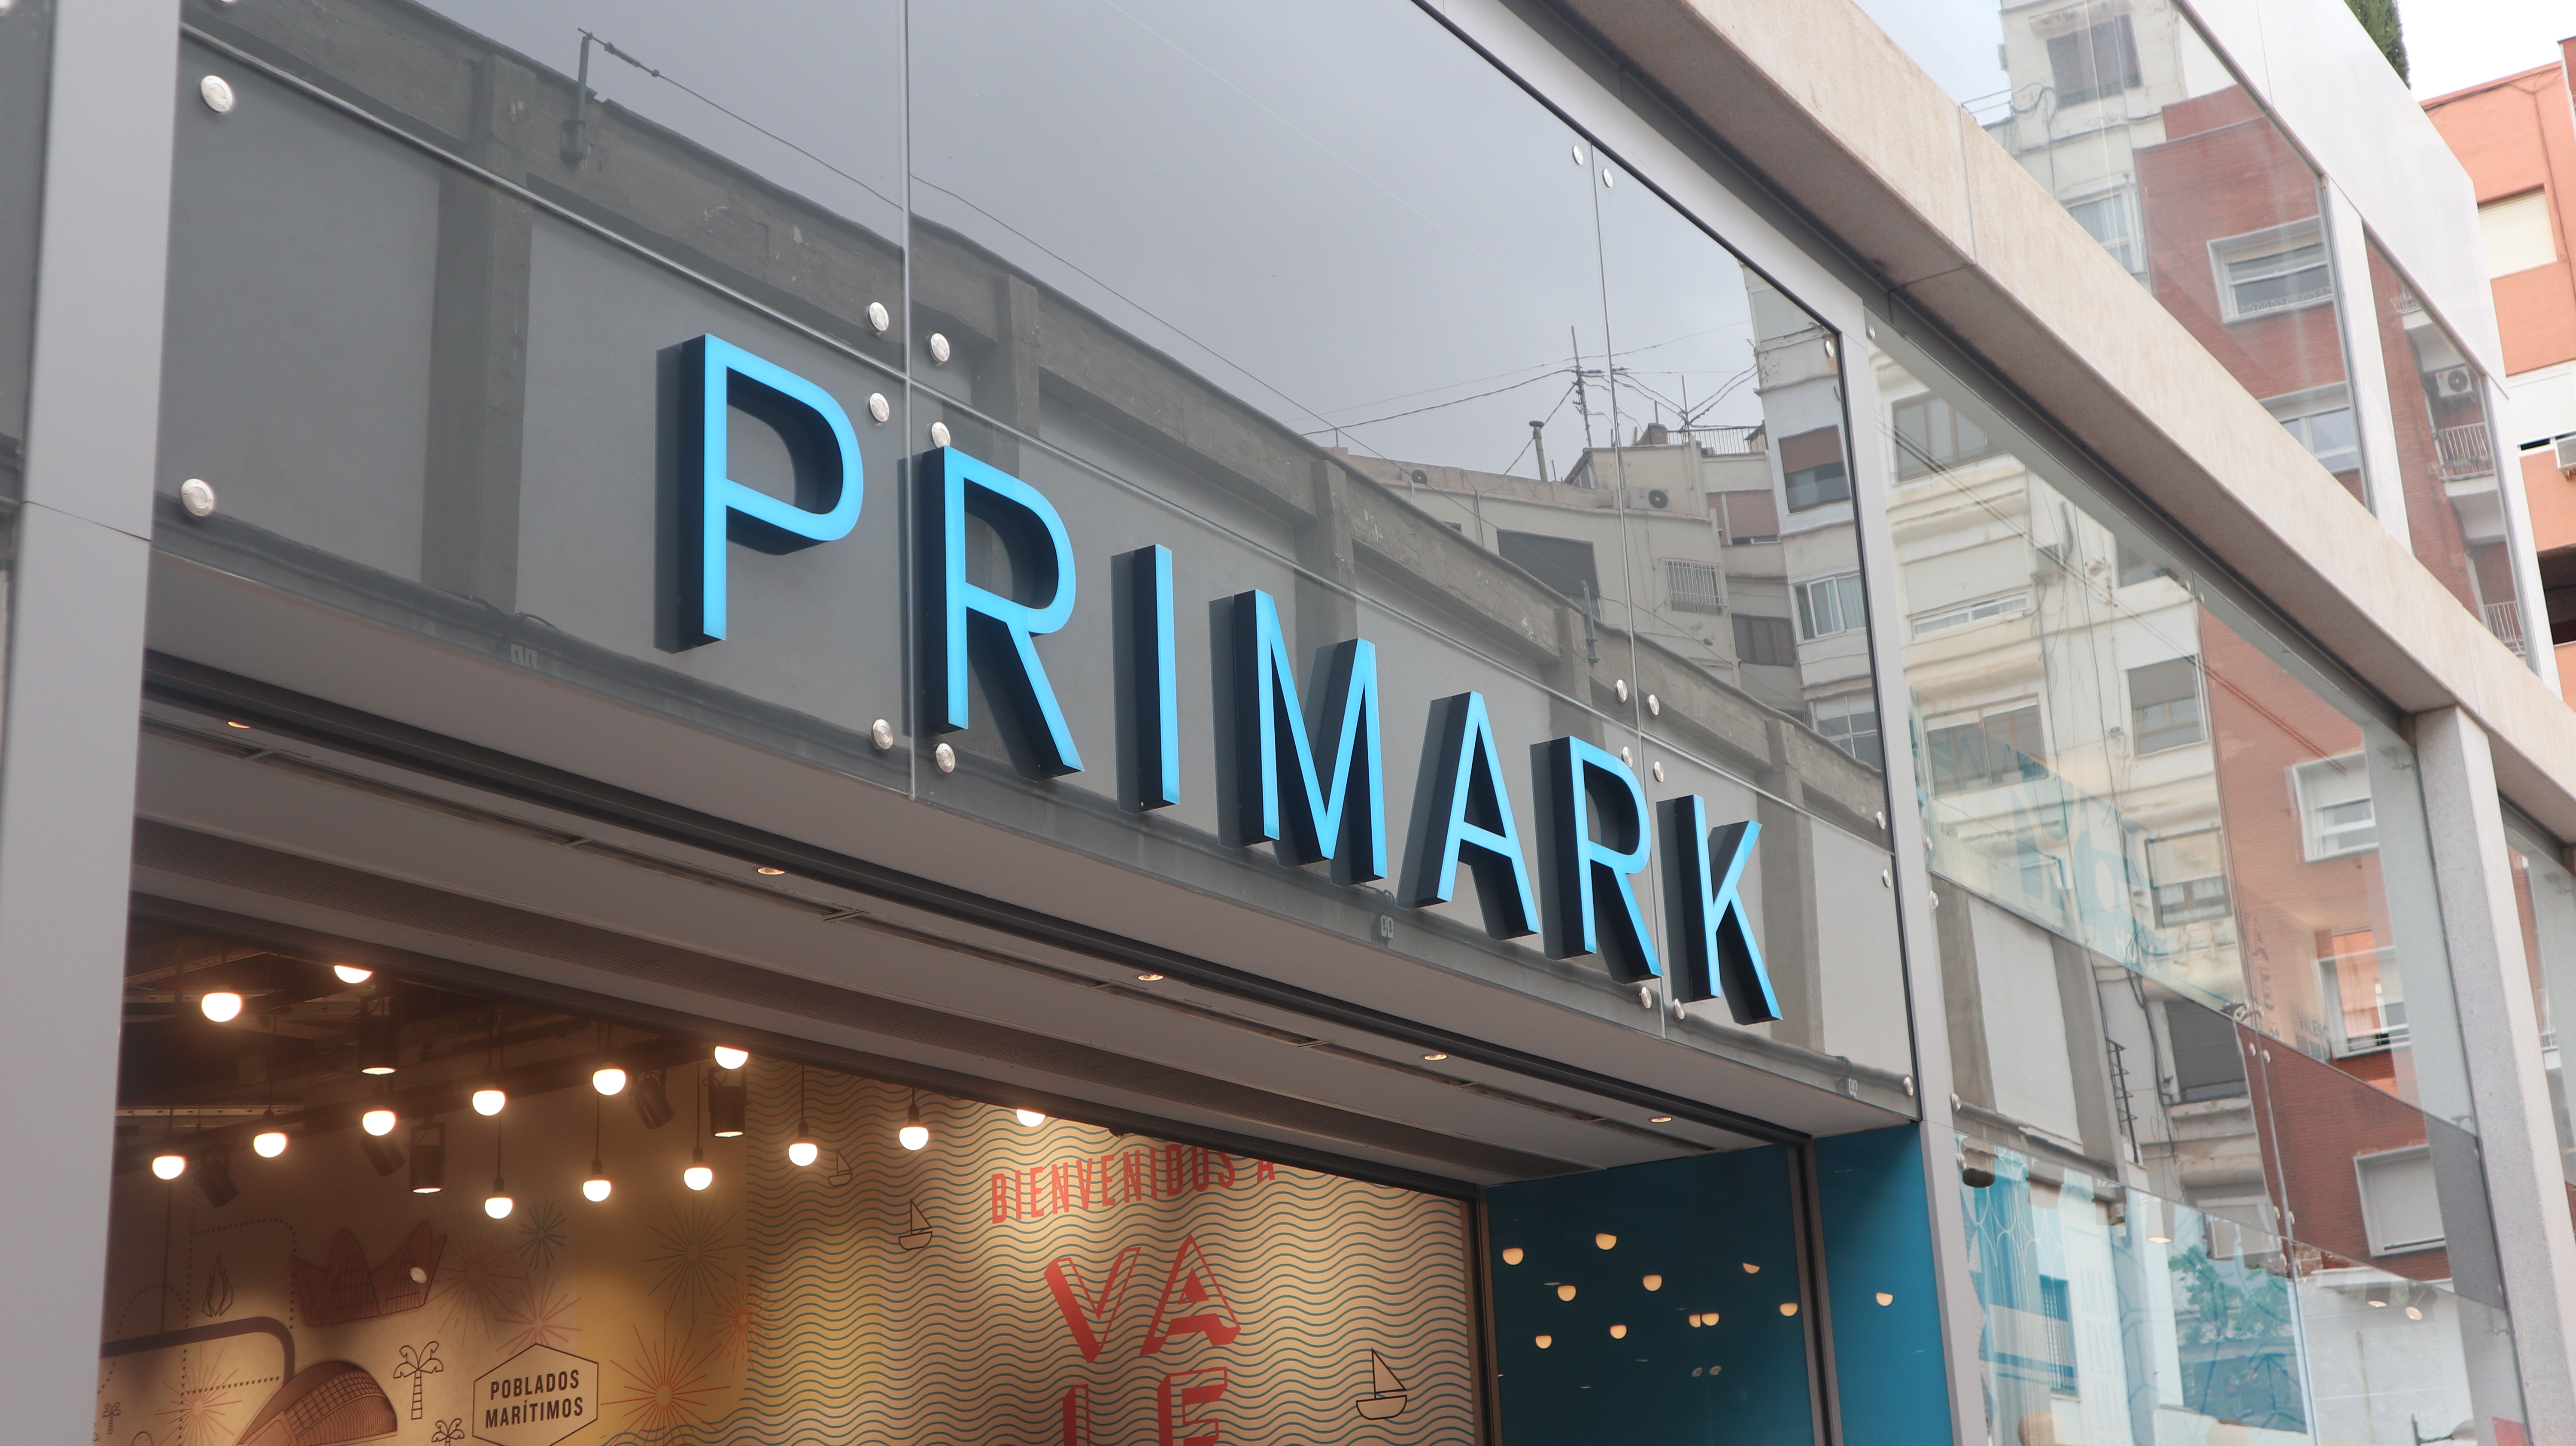  shopping à Valencia - Primark